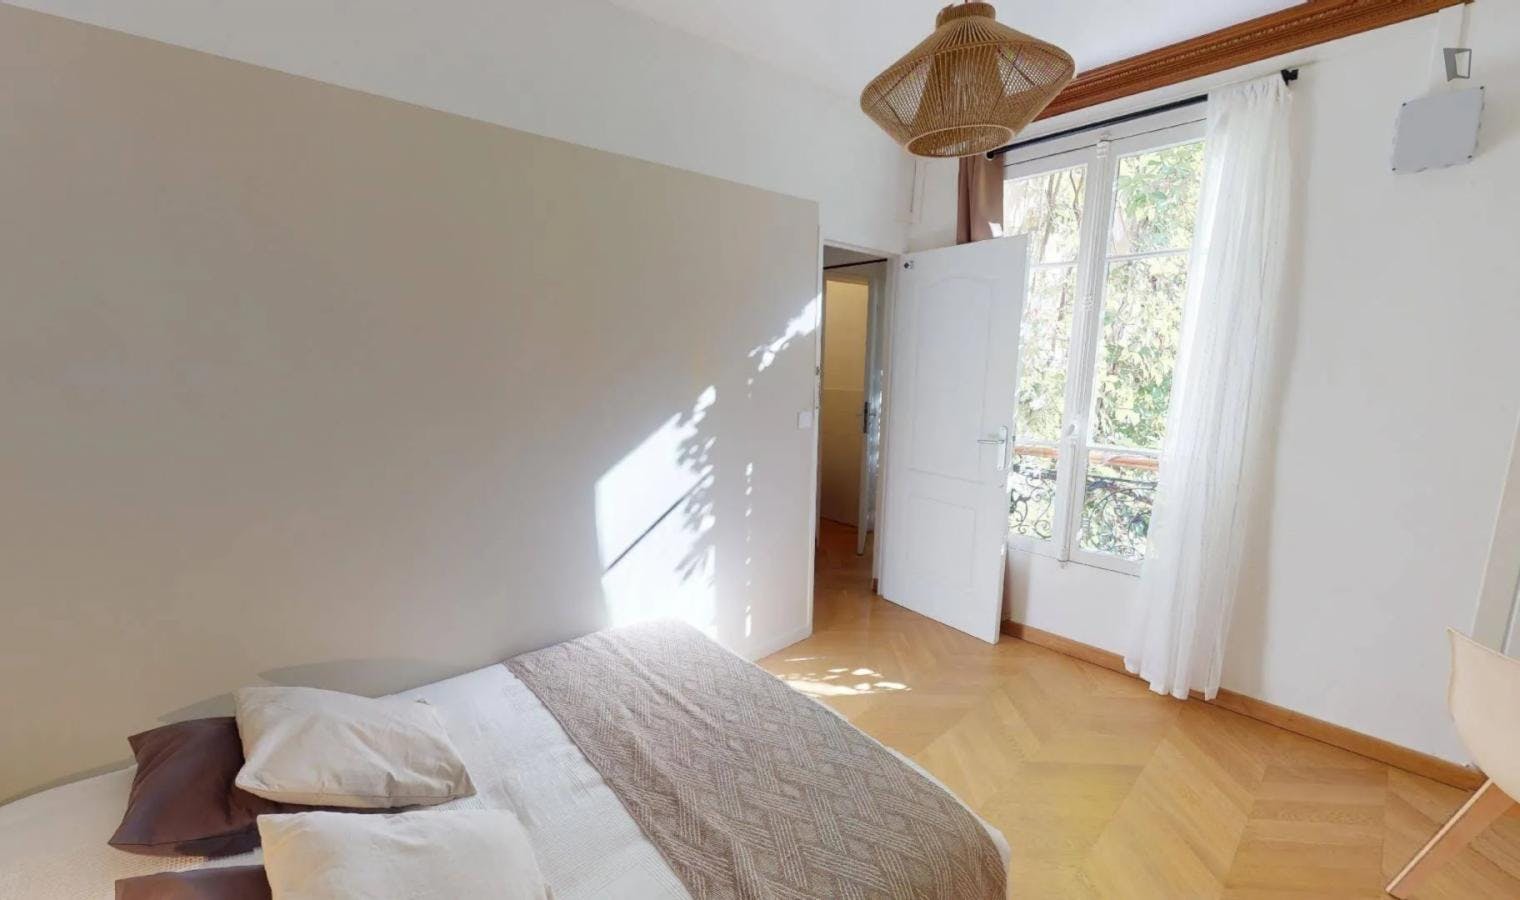 Sunny double bedroom in Villiers-la-Garenne